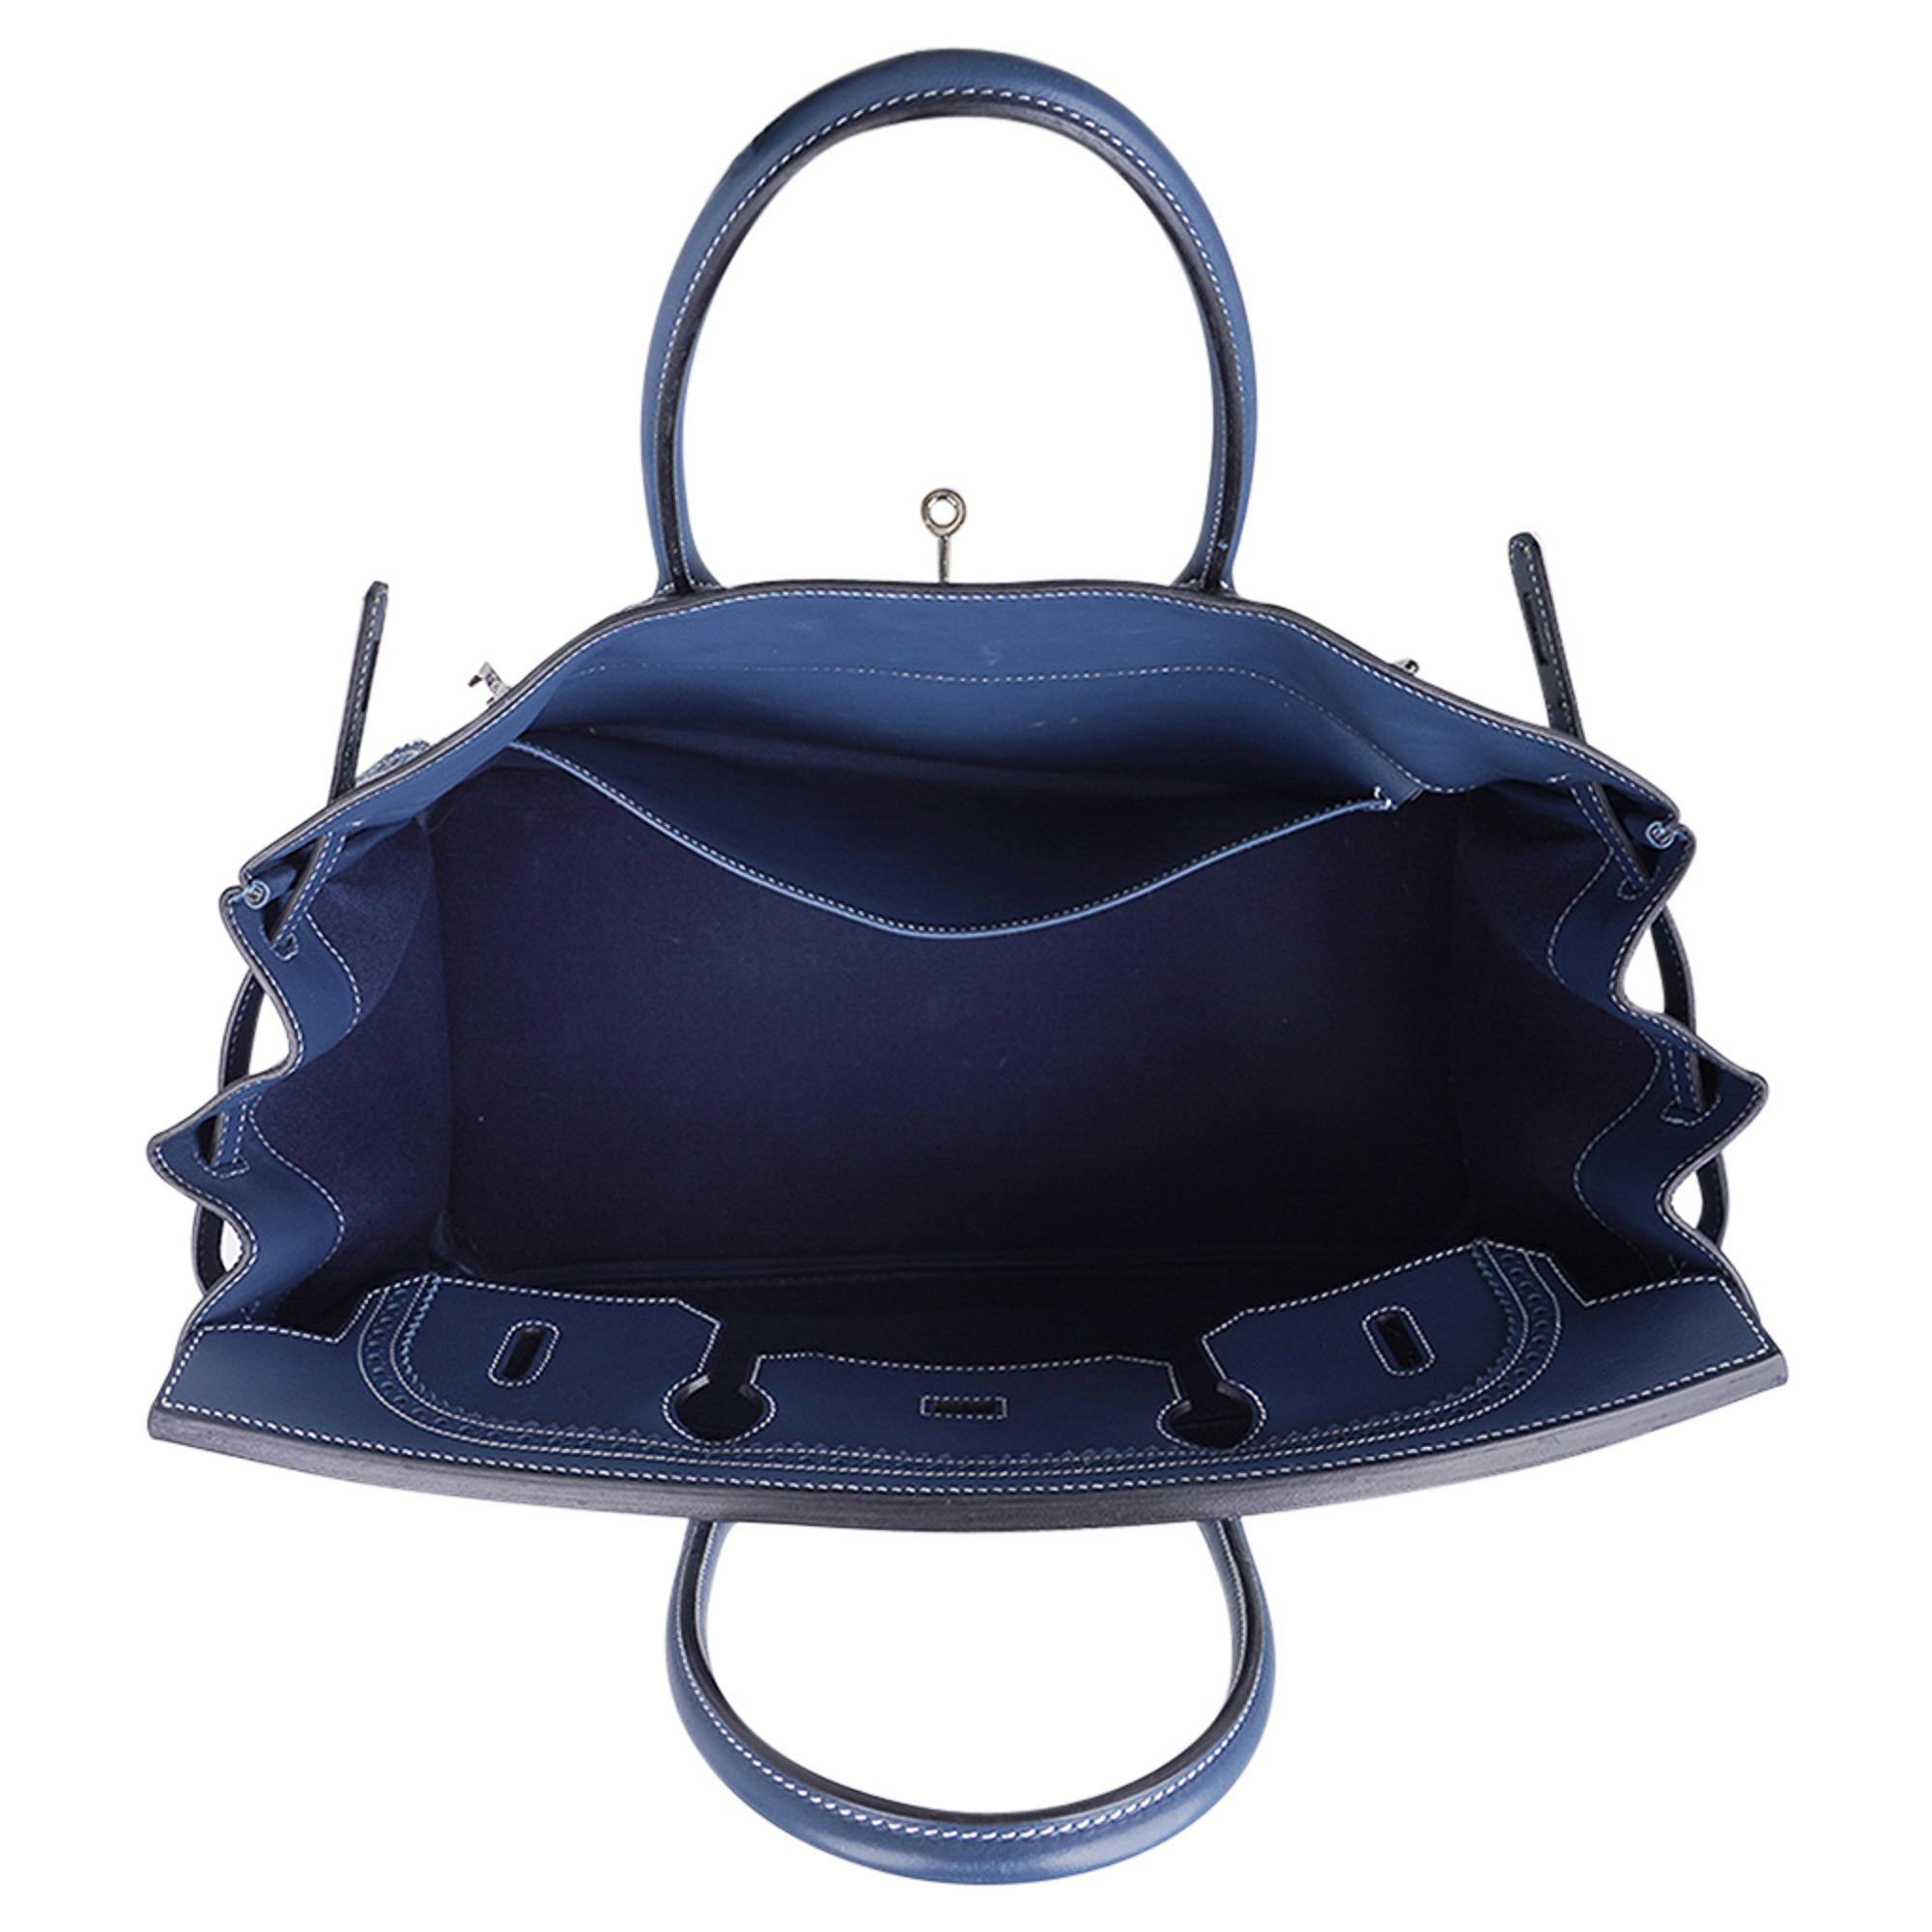 Hermes Birkin 40 Ghillies Blue de Prusse w/ Blue Toile Bag Limited Edition For Sale 11